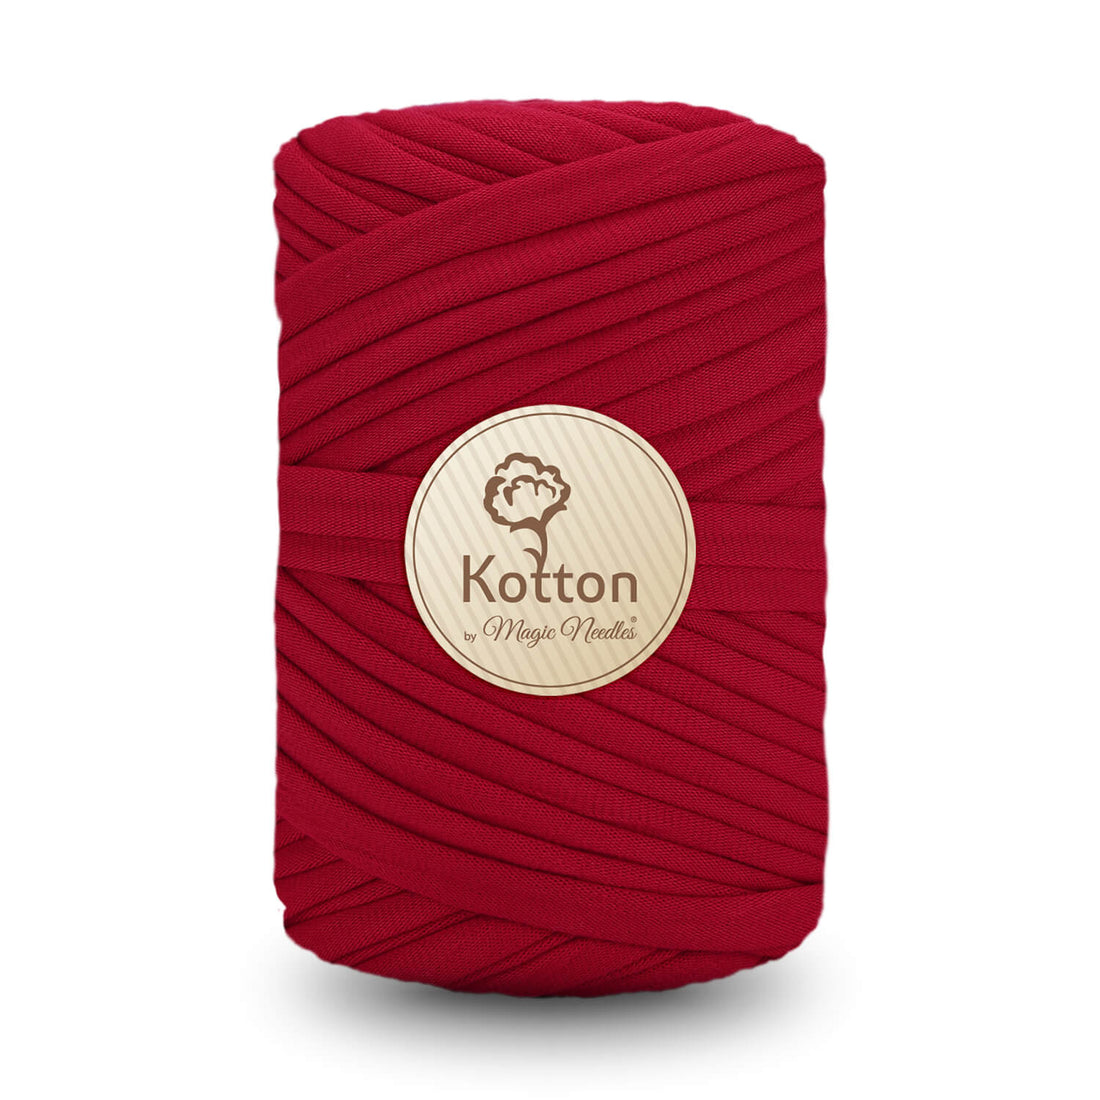 T-Shirt Yarn by Kotton - Red V14